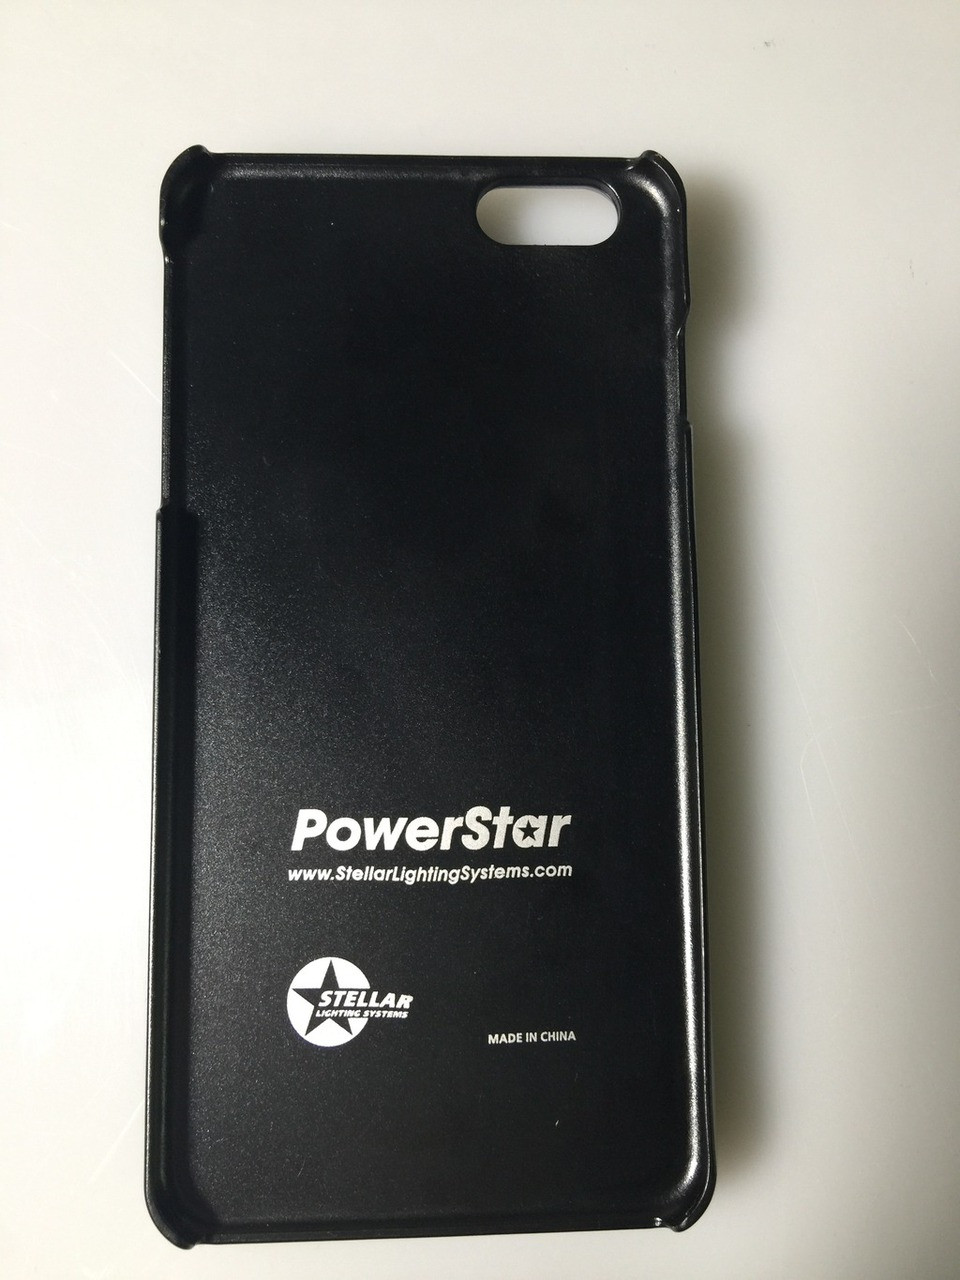 Stellar Lighting PowerStar battery Pack and pro Video lighting case for IPhone 6+ (PLUS)